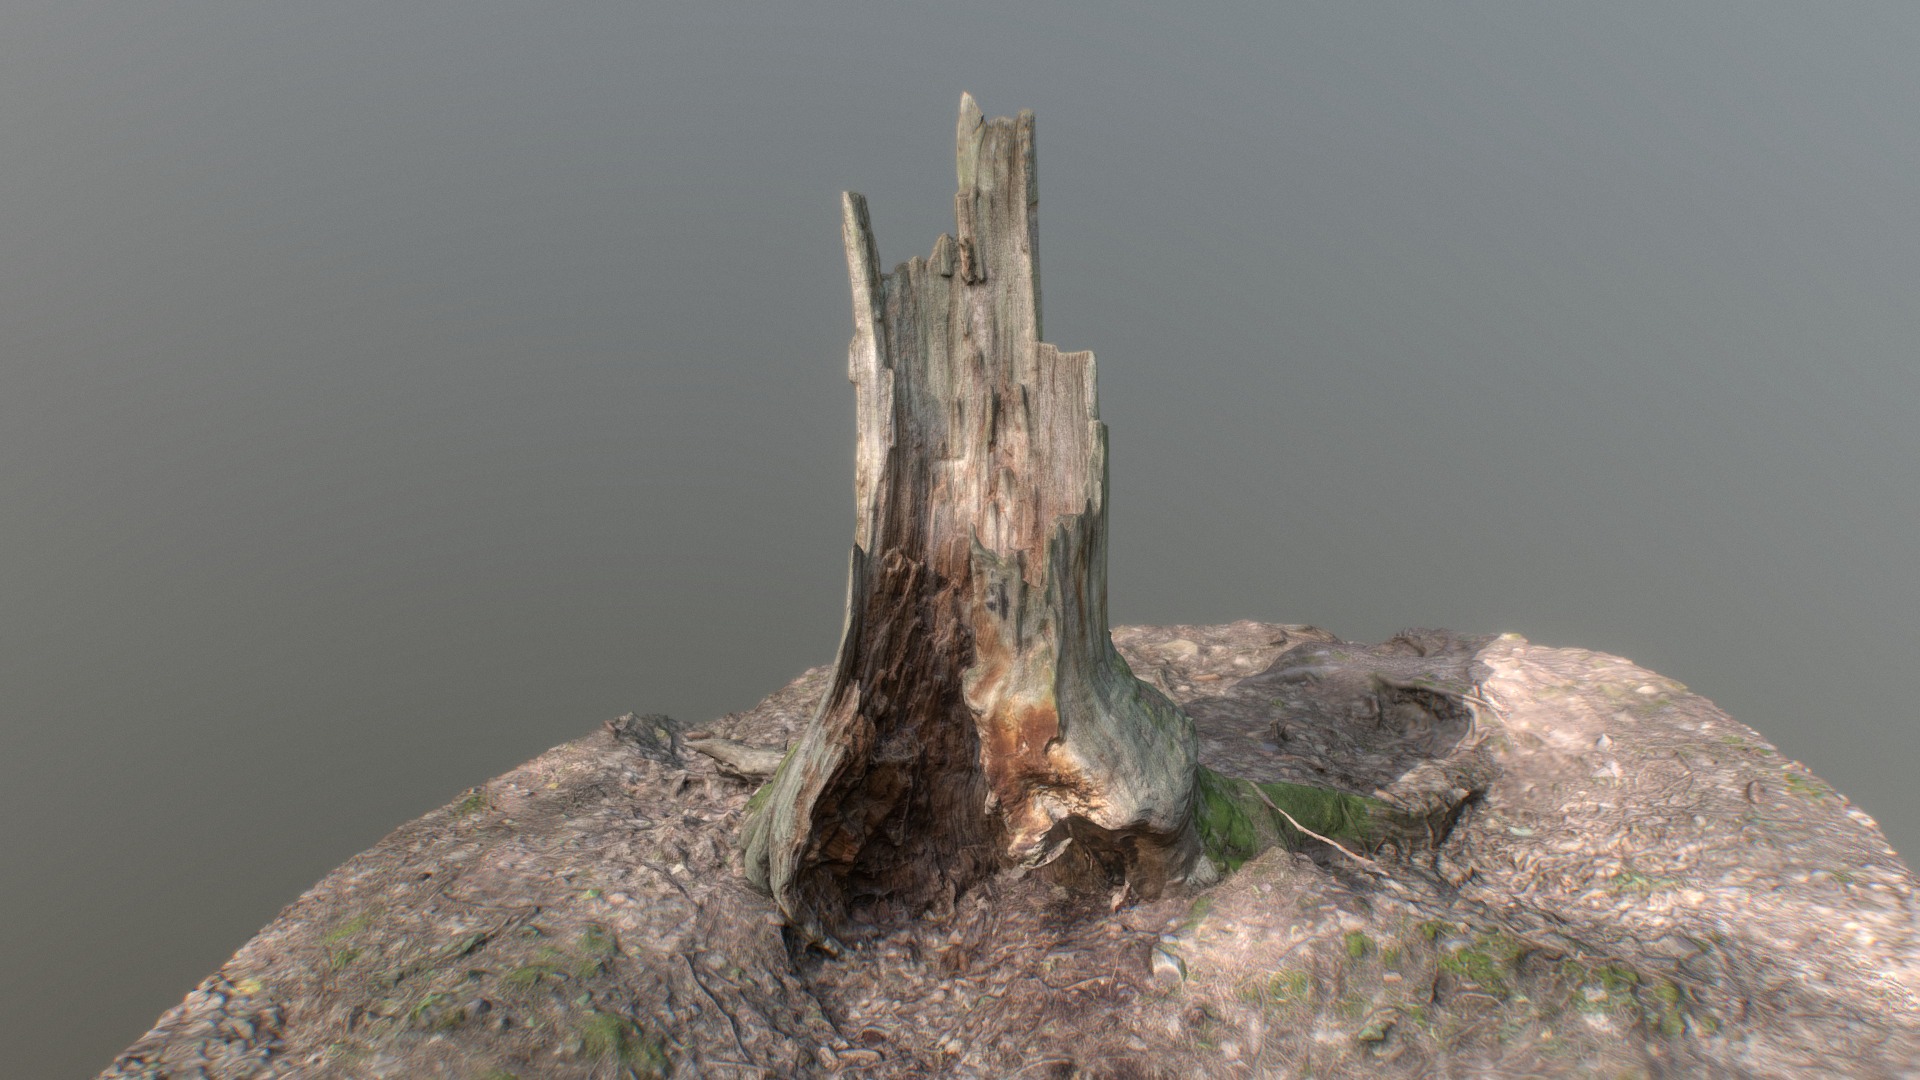 3D model Irregular tree stump - This is a 3D model of the Irregular tree stump. The 3D model is about a tree stump on a rocky hill.